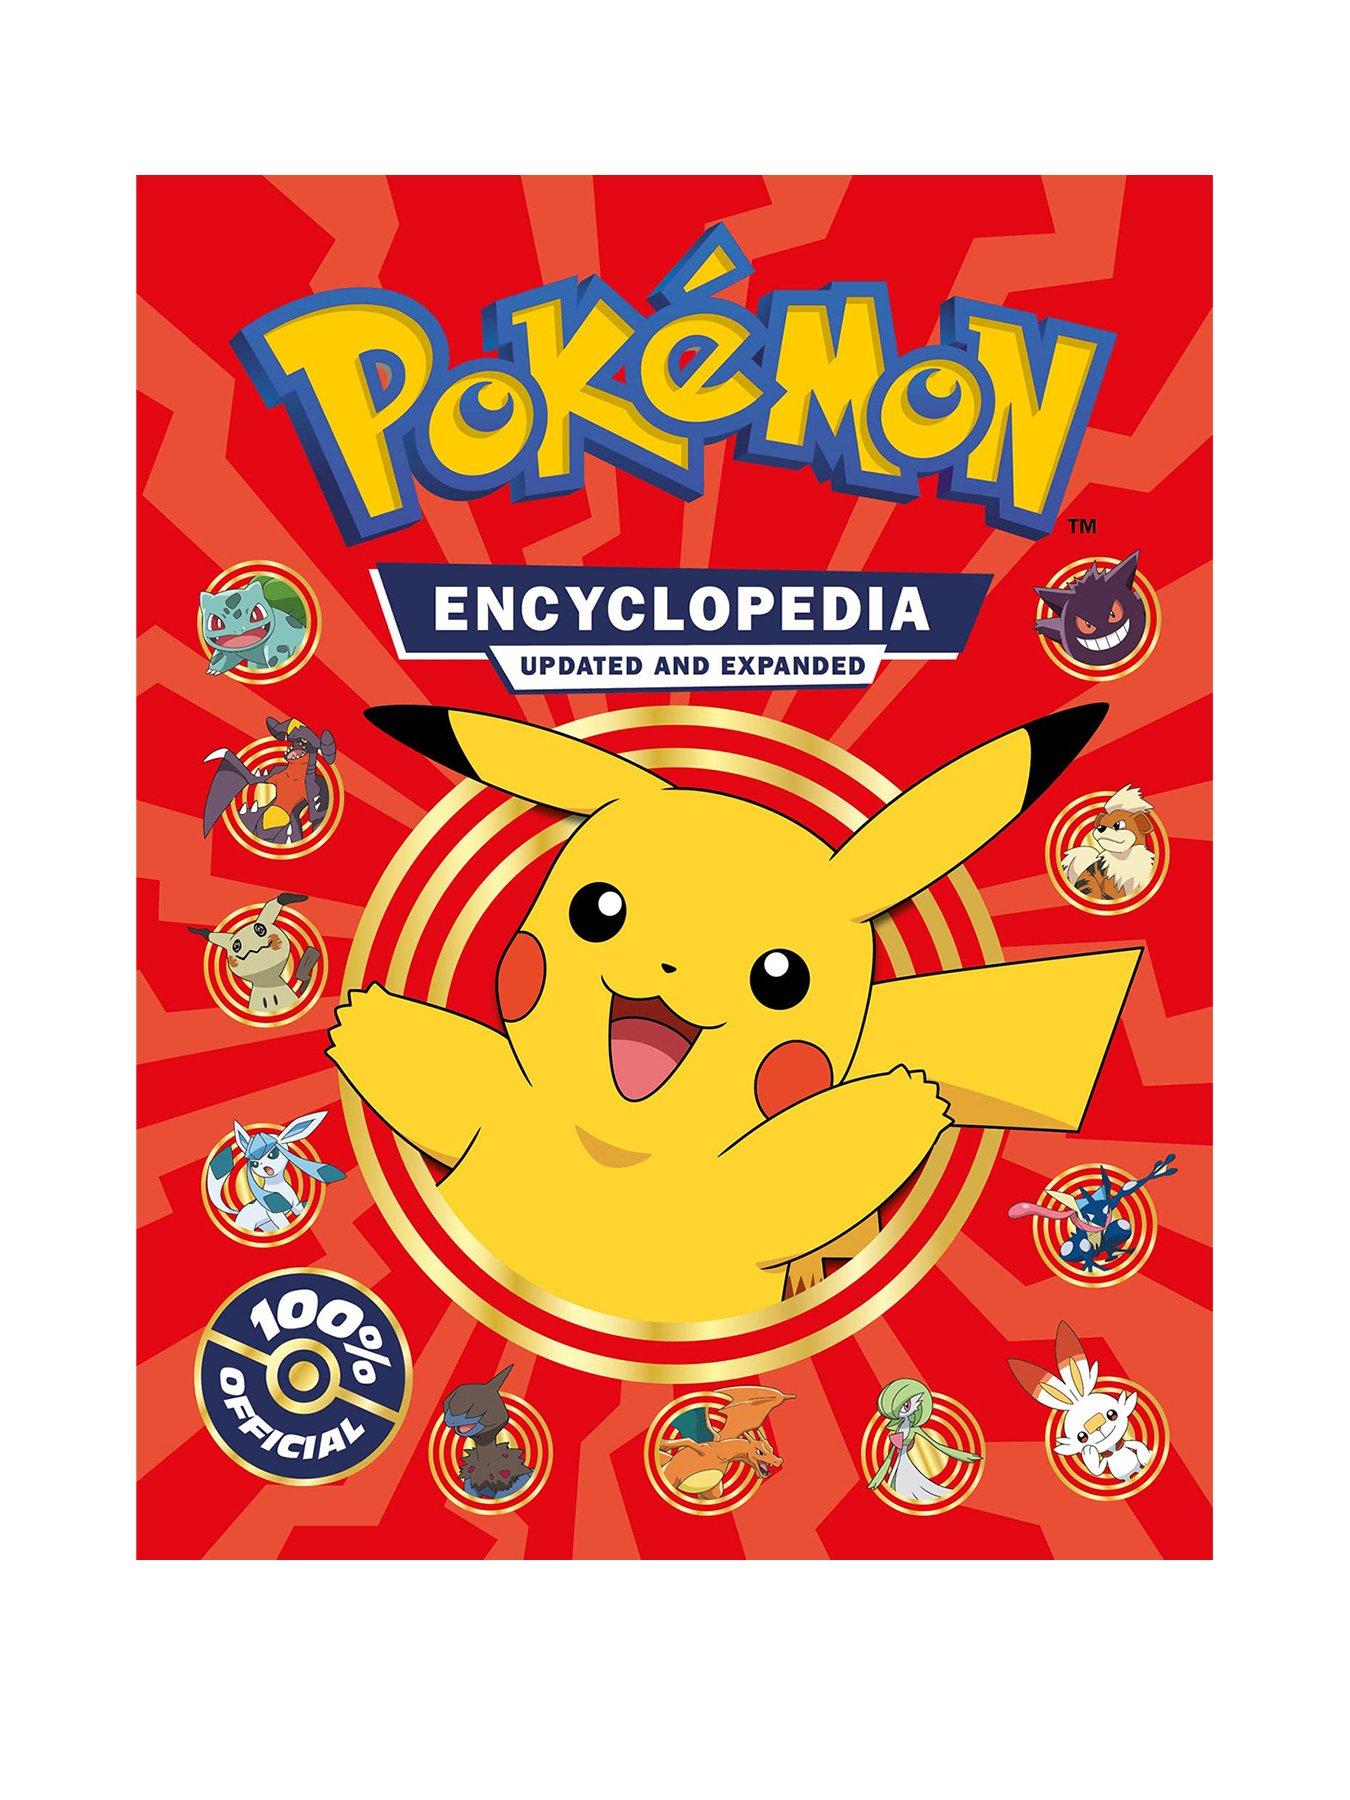 Pokemon - Johto Collection (Collector's Pokedex Book), DVD, Buy Now